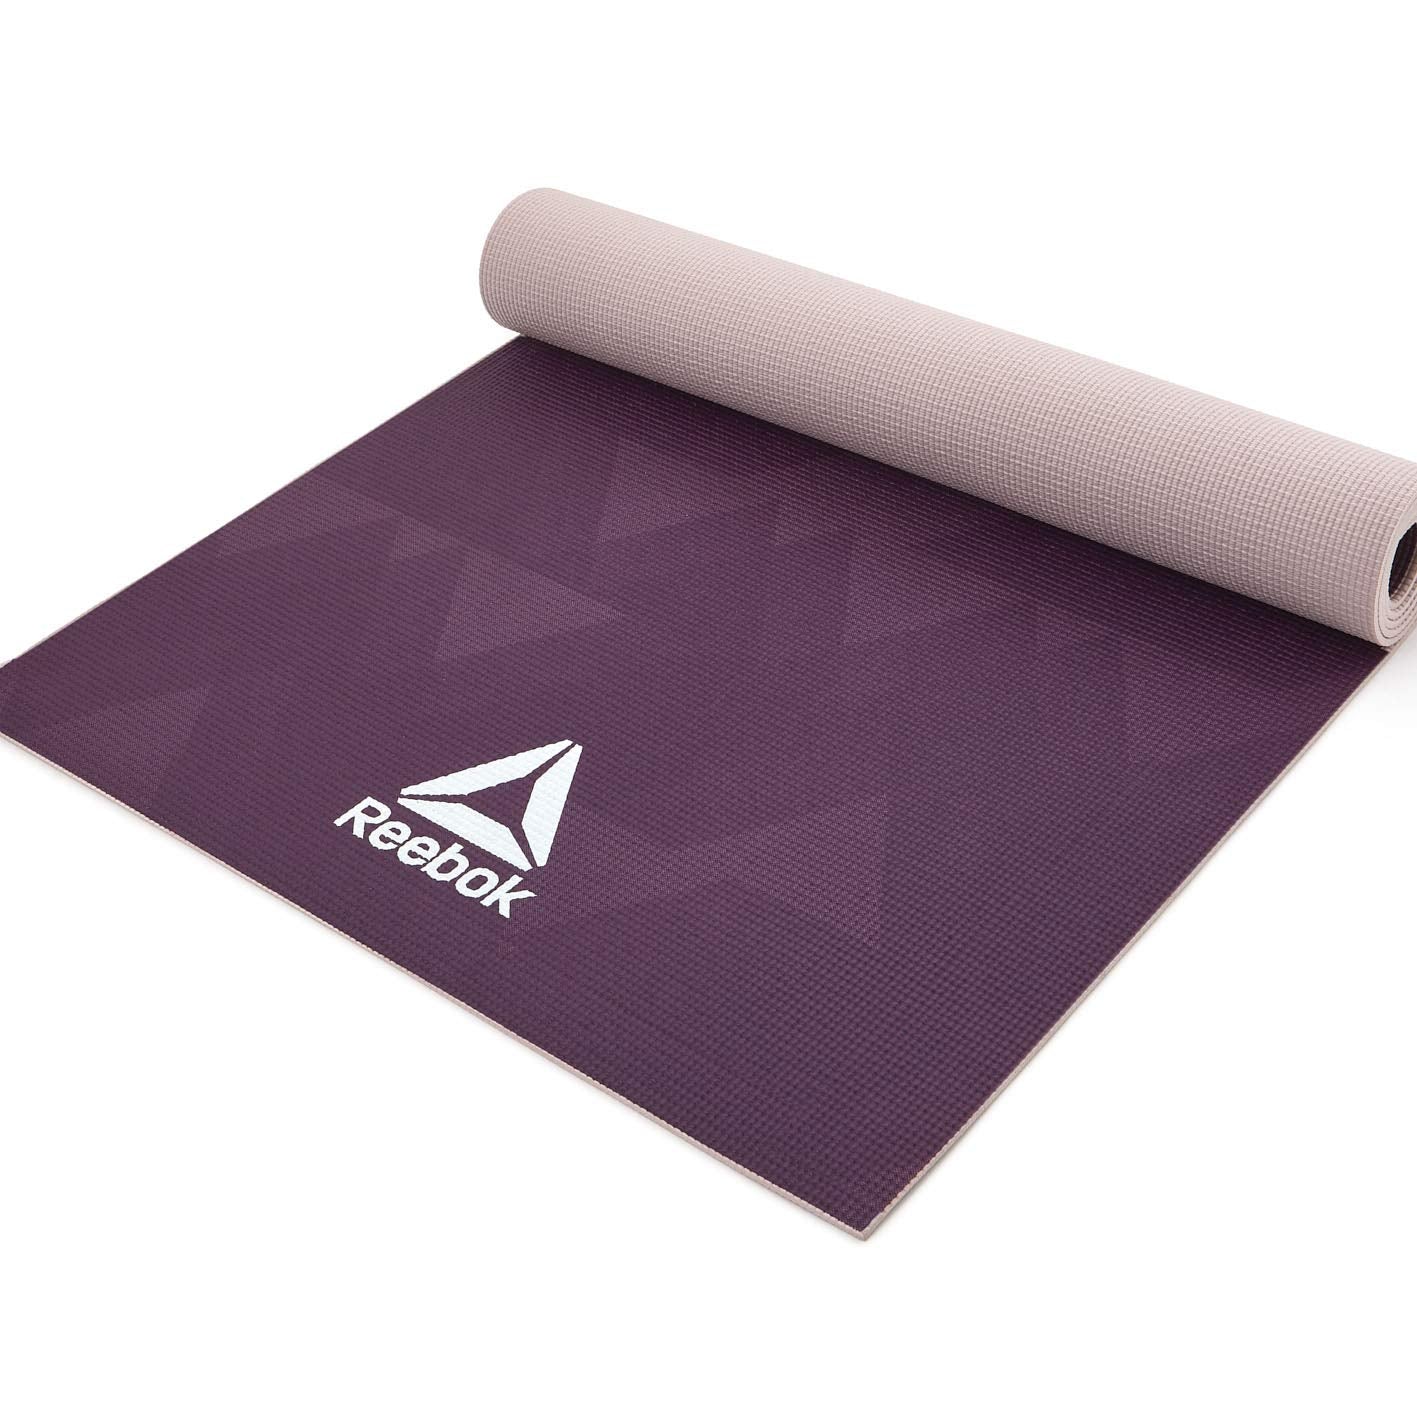 Reebok Double Sided Fitness Training Yoga Mat, 4 MM (Geometric) –  Prokicksports